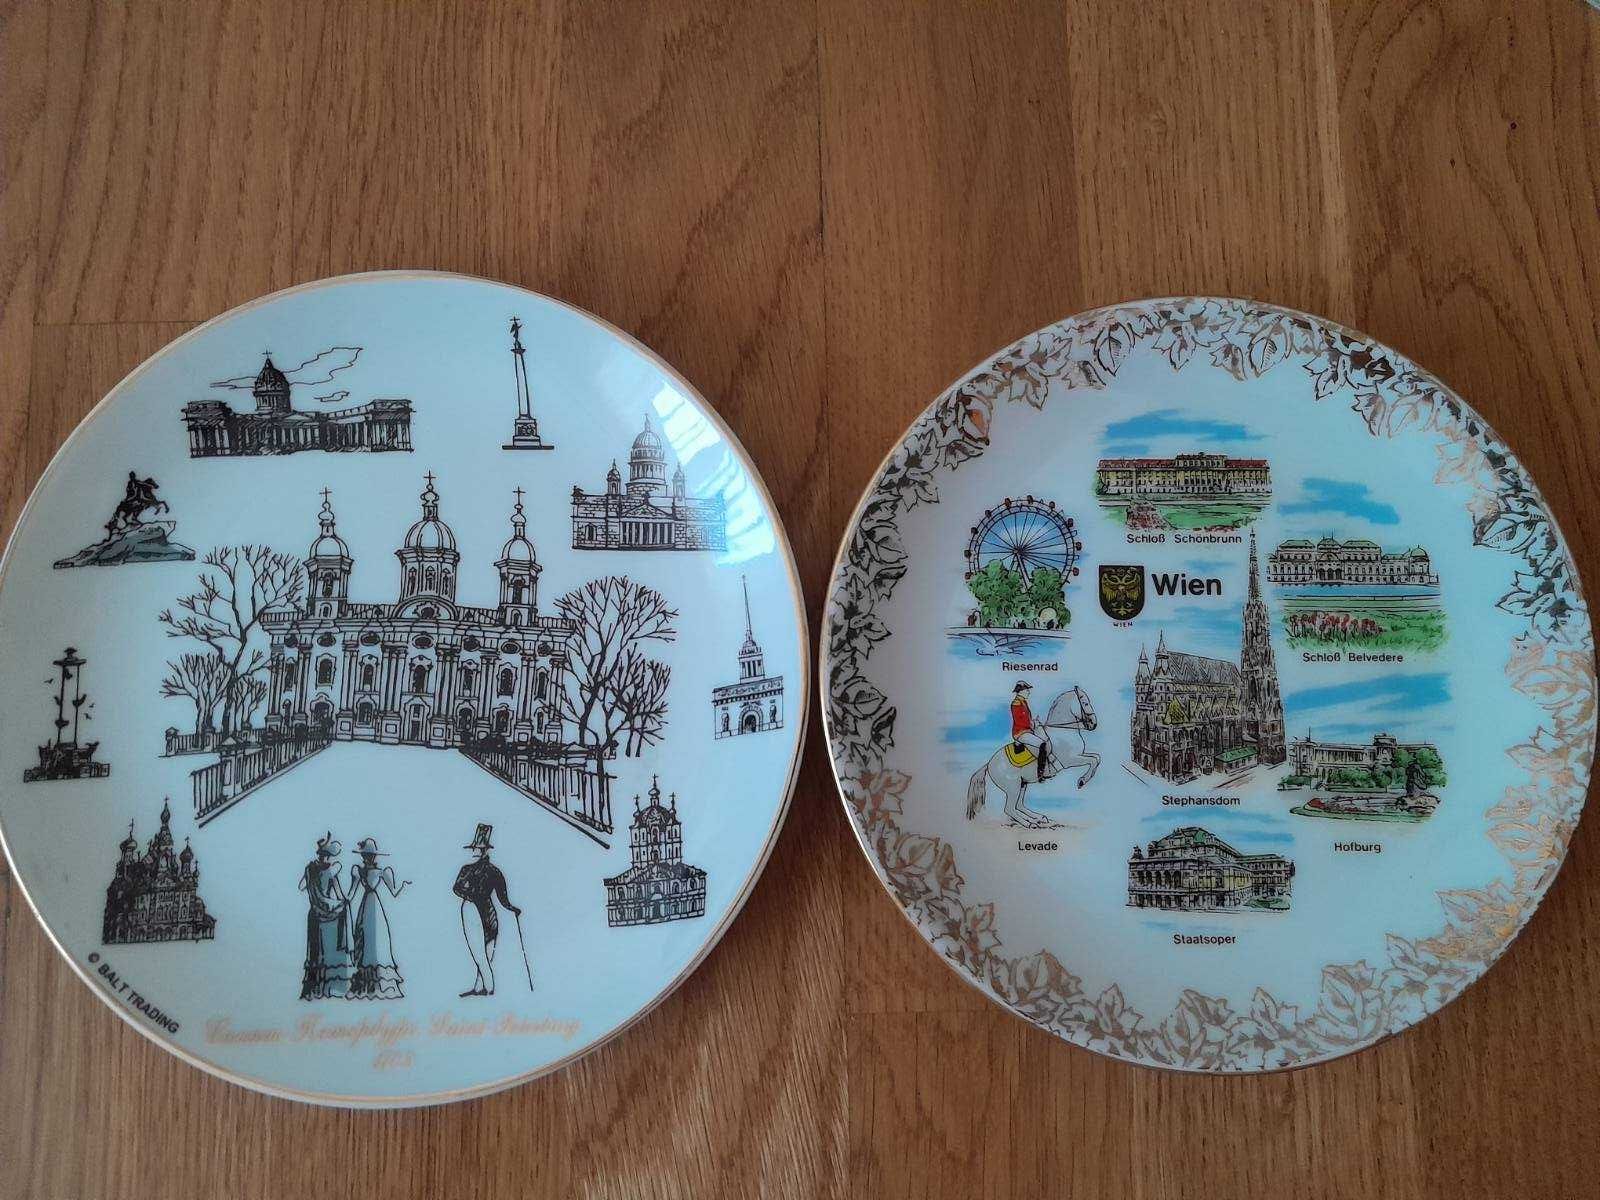 Декоративные тарелки-сувениры